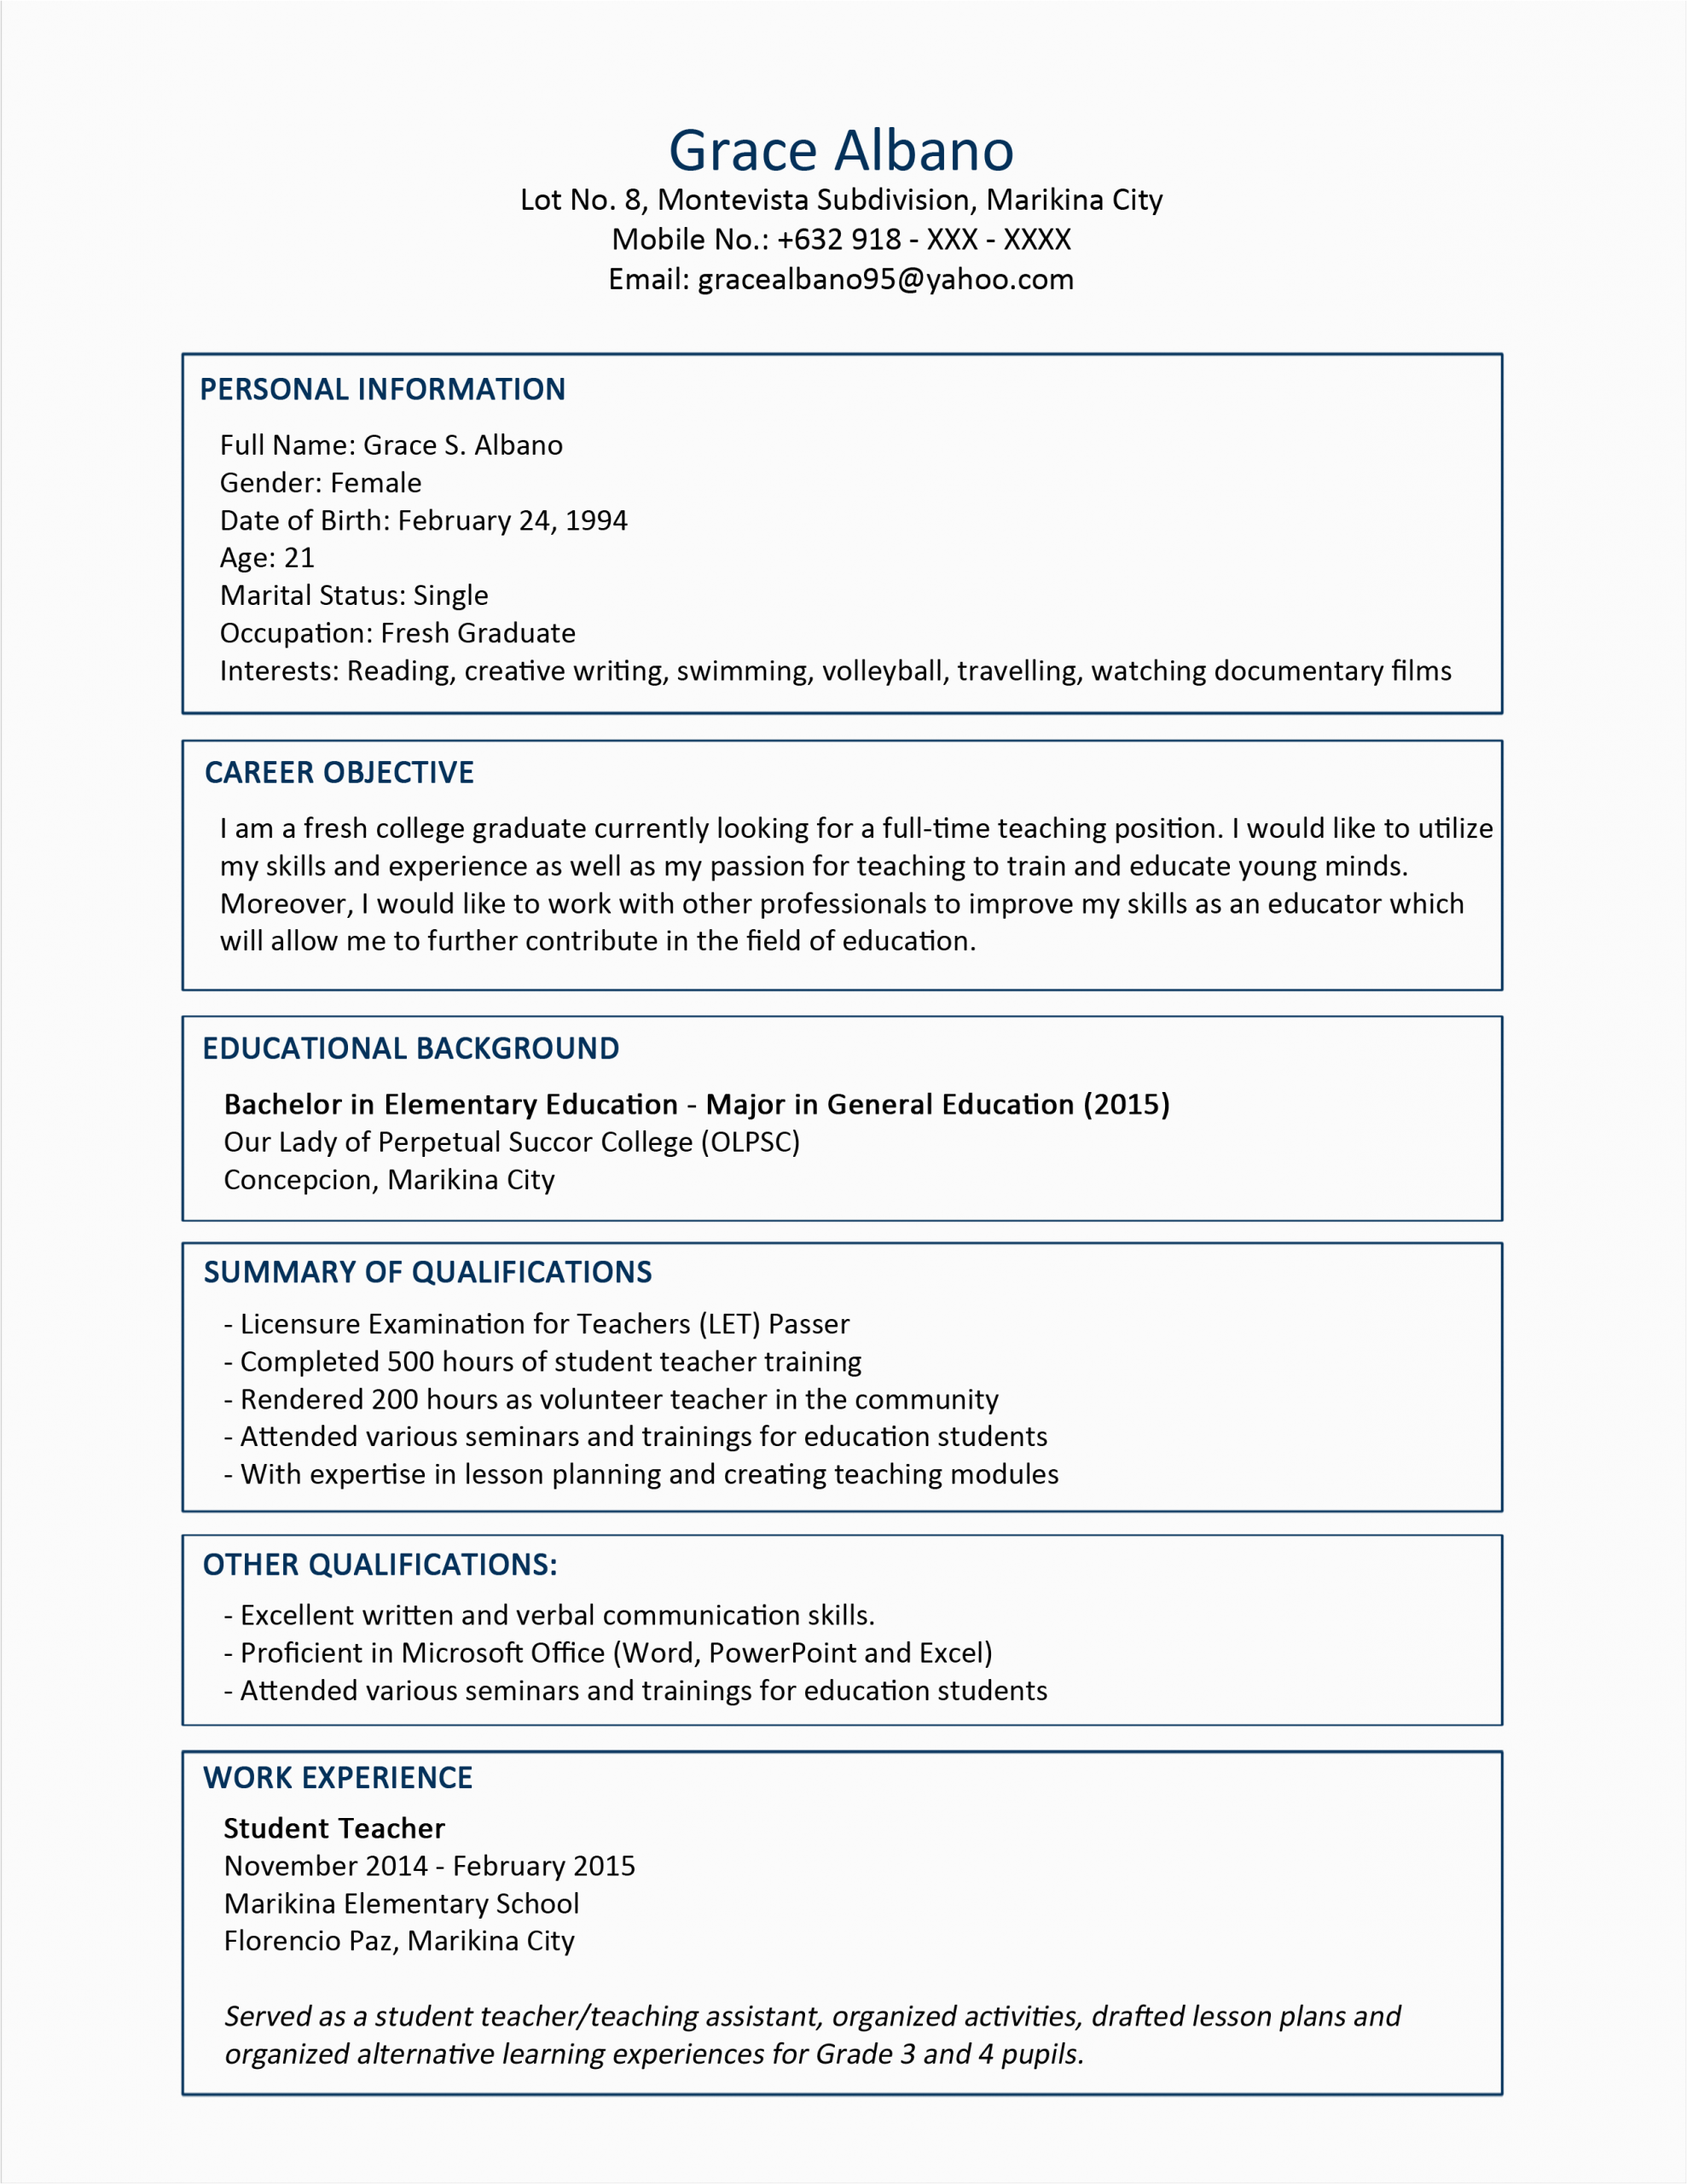 Sample Resume for Cpa Fresh Graduate Philippines Sample Resume format for Fresh Graduates Two Page format